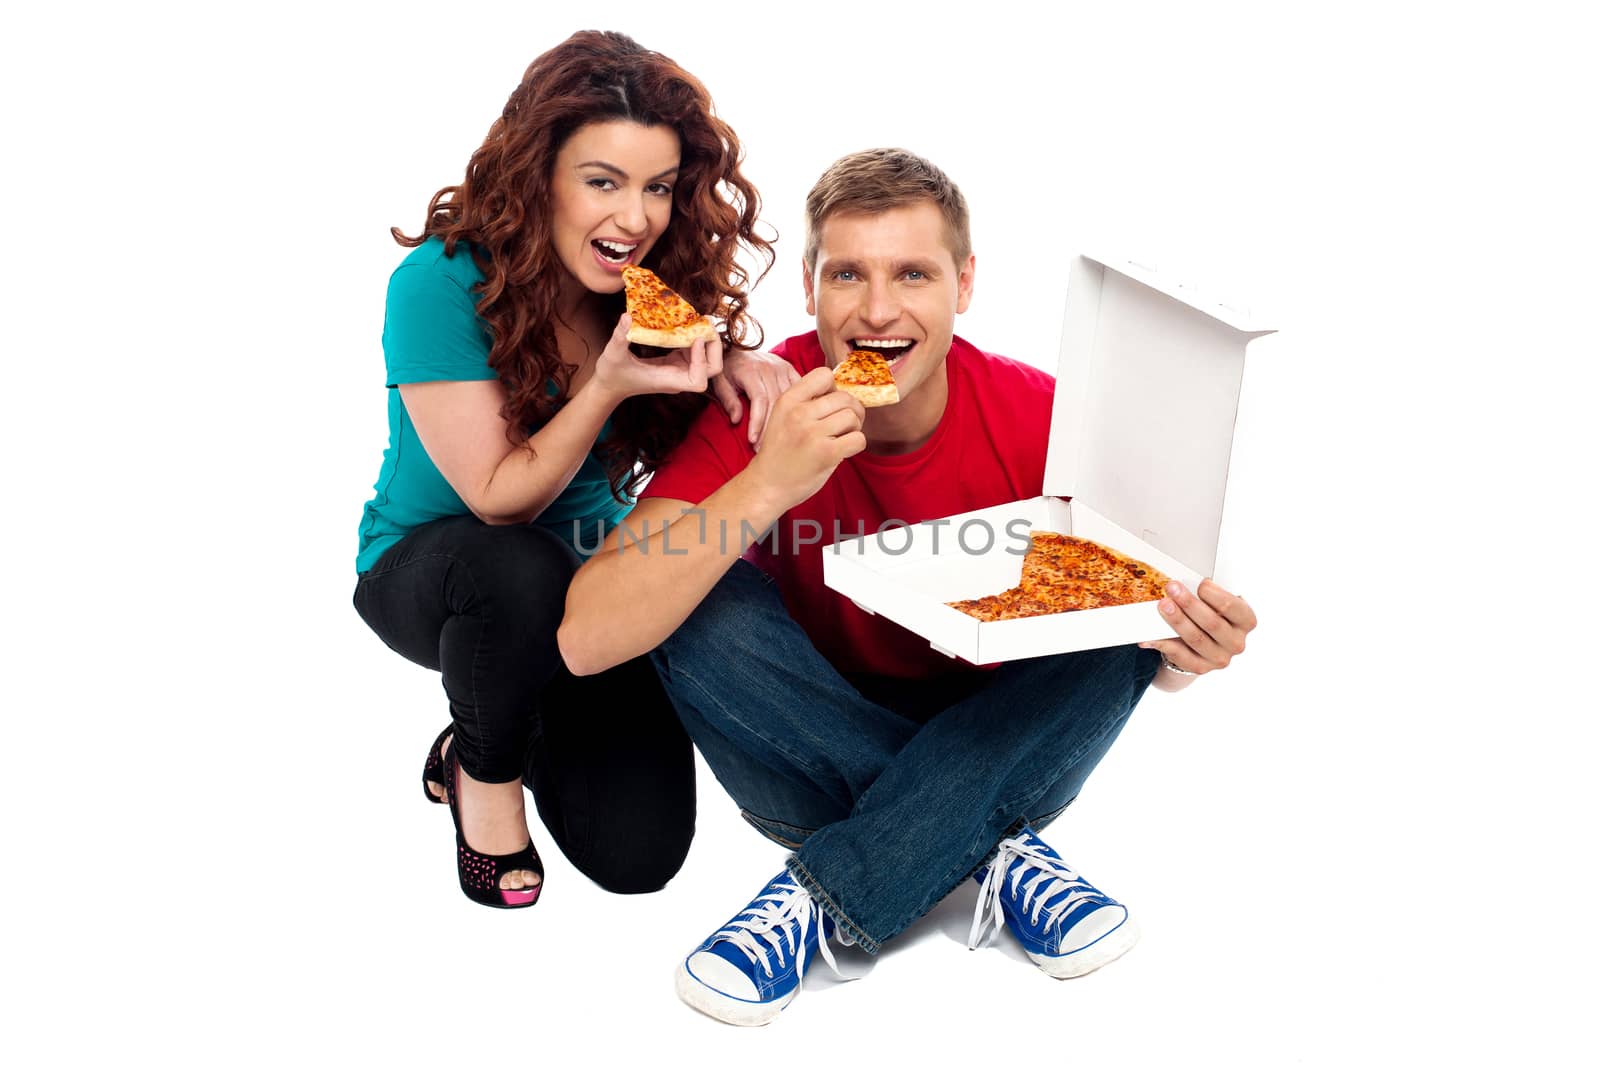 Young couple sitting on floor and enjoying yummy pizza